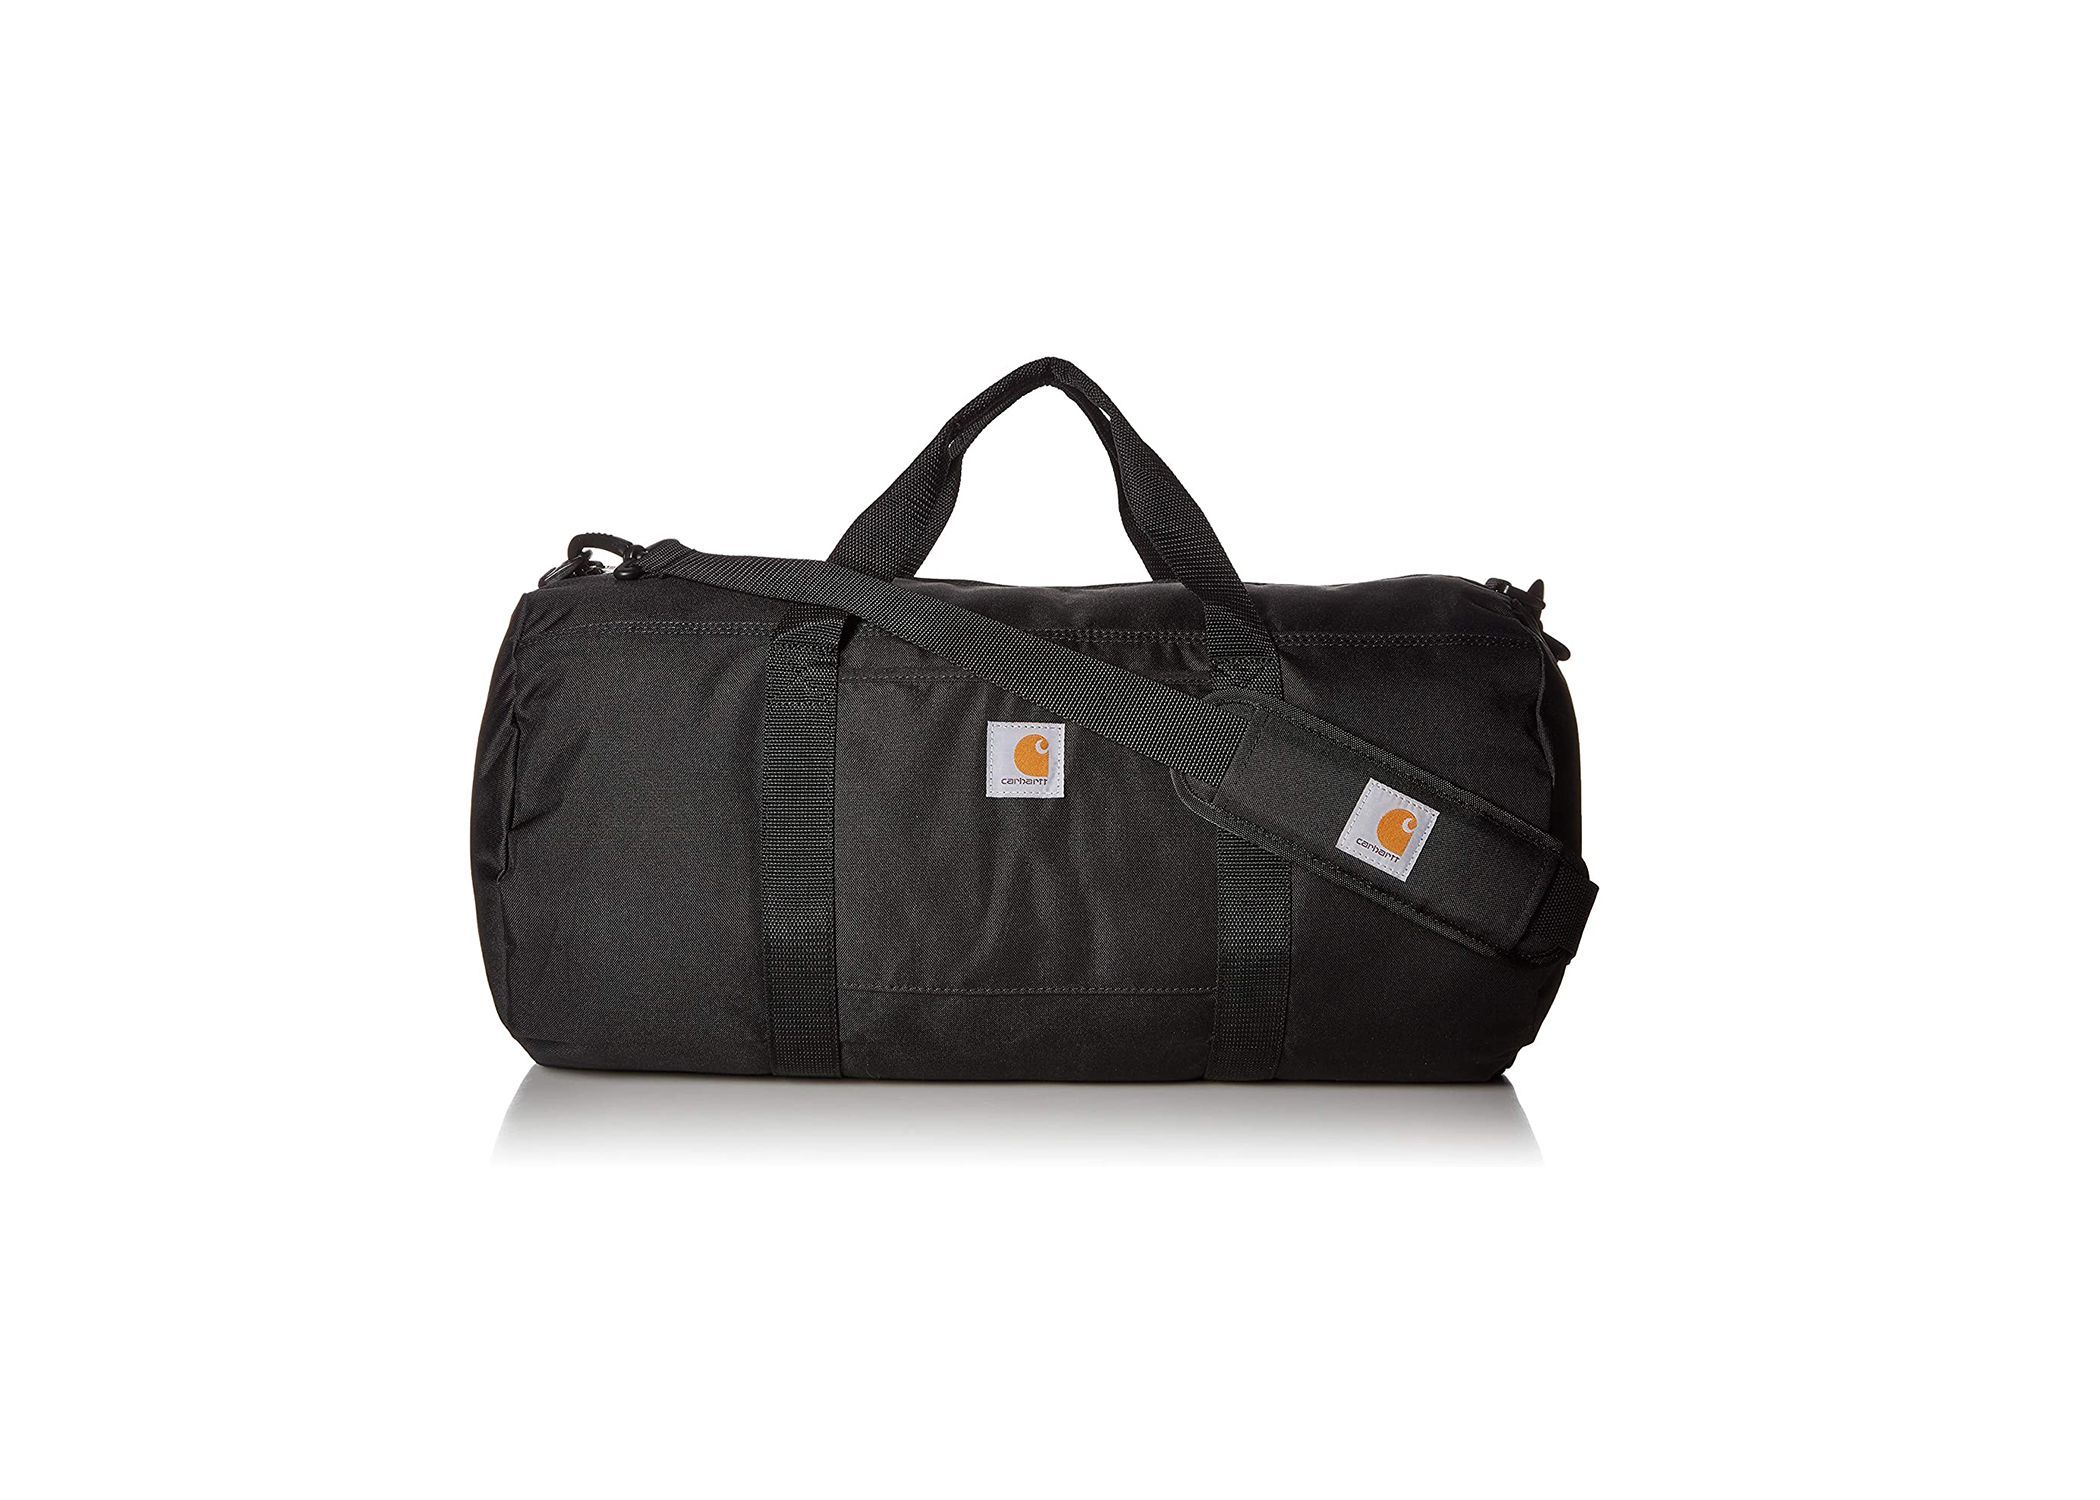 JTRVW Luggage Bags for Travel Lightweight Large Capacity Portable Duffel Bag for Men & Women Taekwondo Kick Travel Duffel Bag Backpack